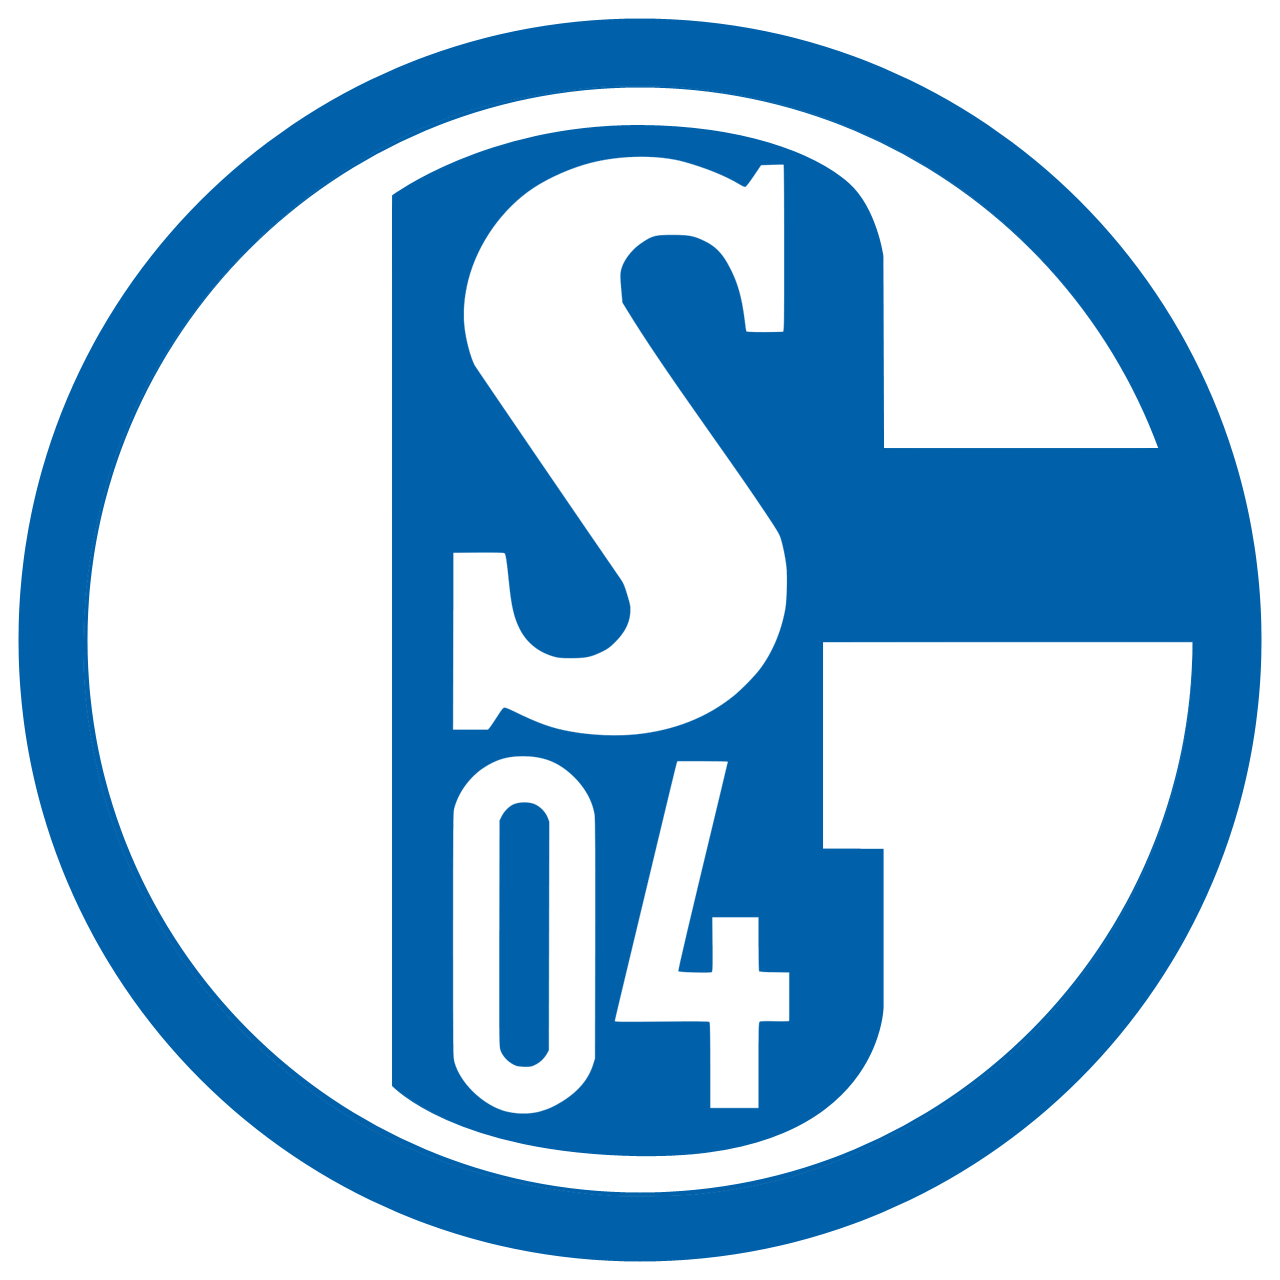 FC Schalke 04 Logo Wallpaper